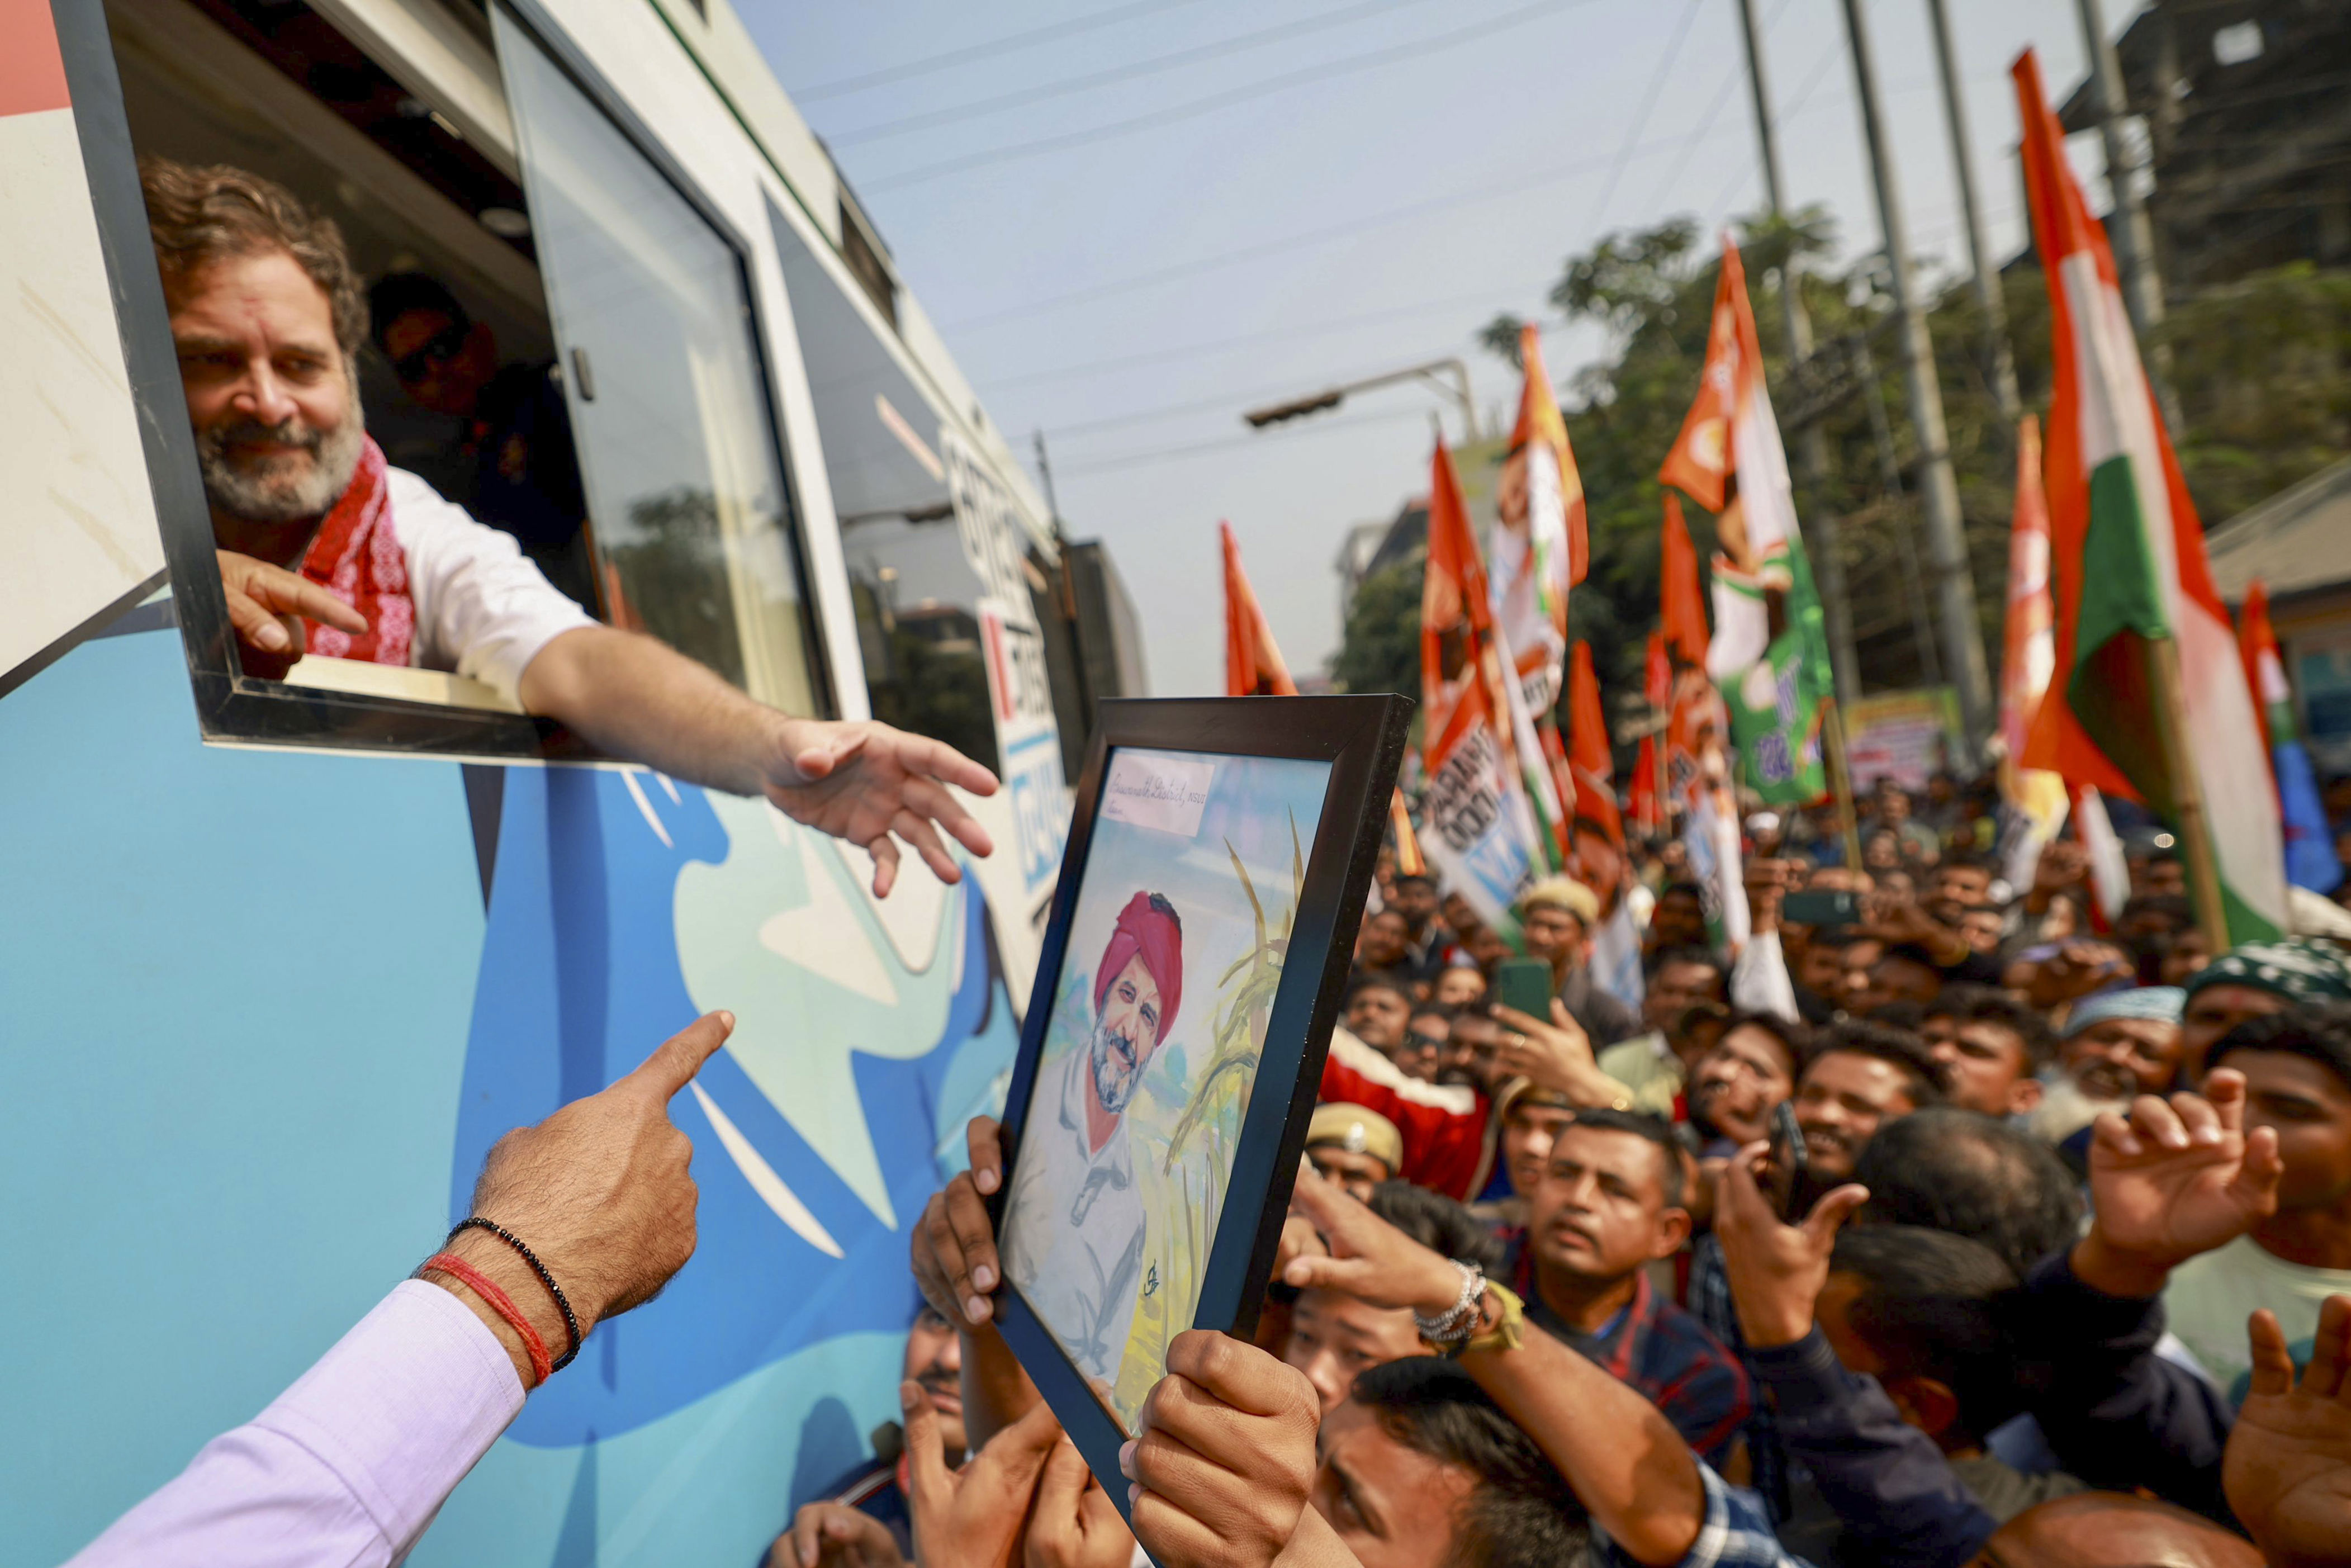 nyay yatra: rahul gives flying kisses to crowd shouting 'jai shri ram', 'modi, modi'